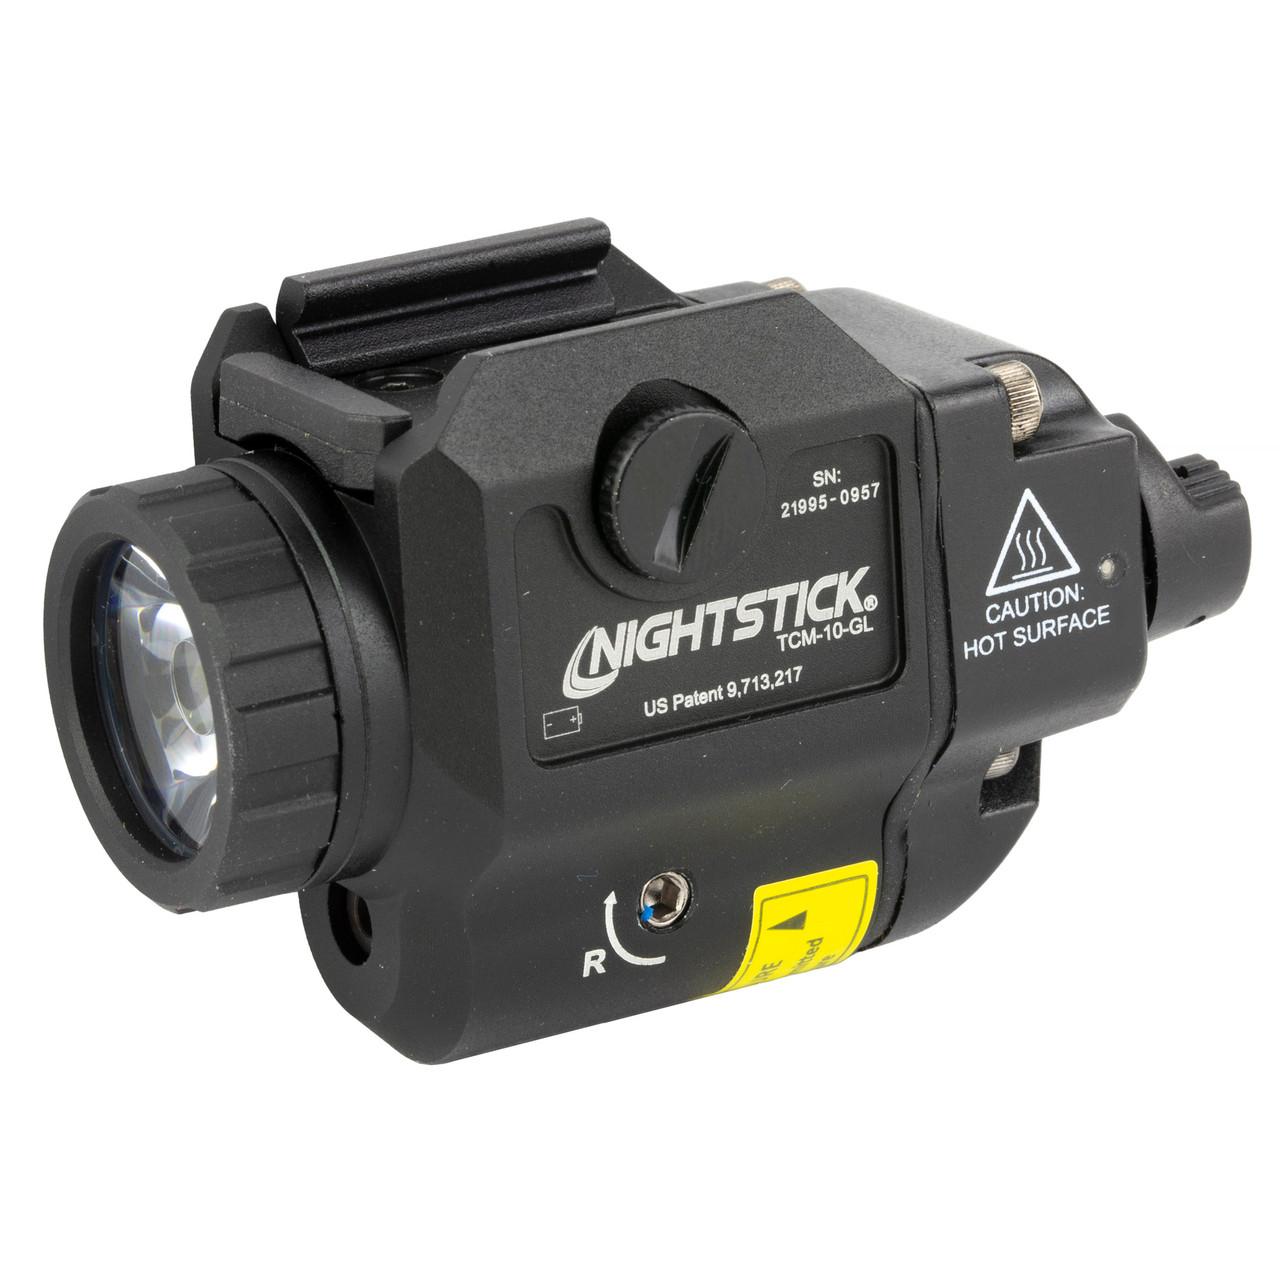 Nightstick TCM-10-GL Comp Wml W/green Laser